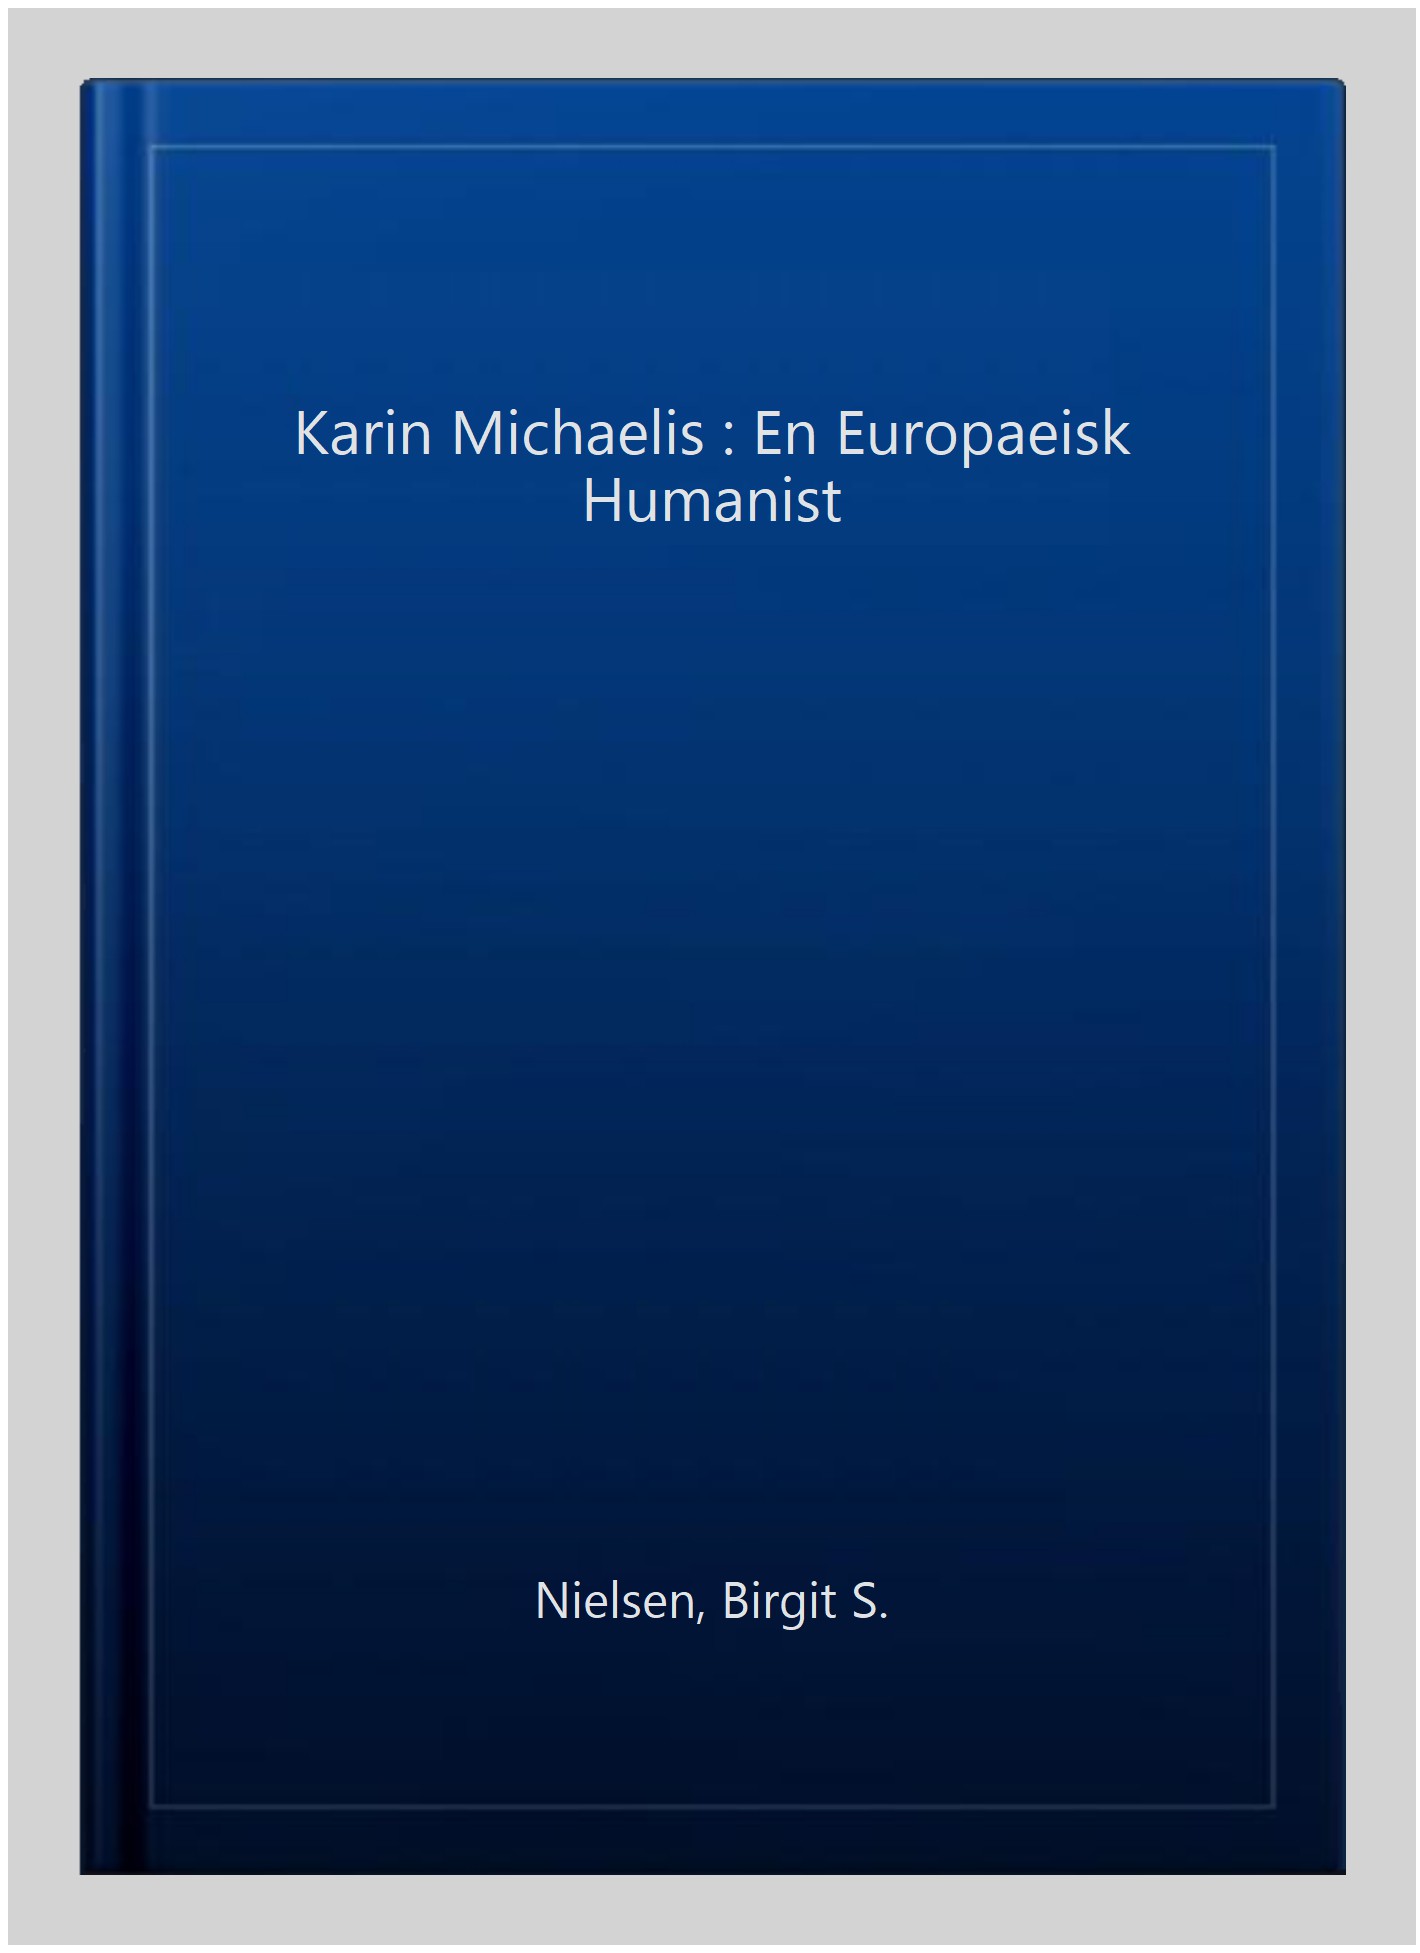 Karin Michaelis : En Europaeisk Humanist -Language: danish - Nielsen, Birgit S